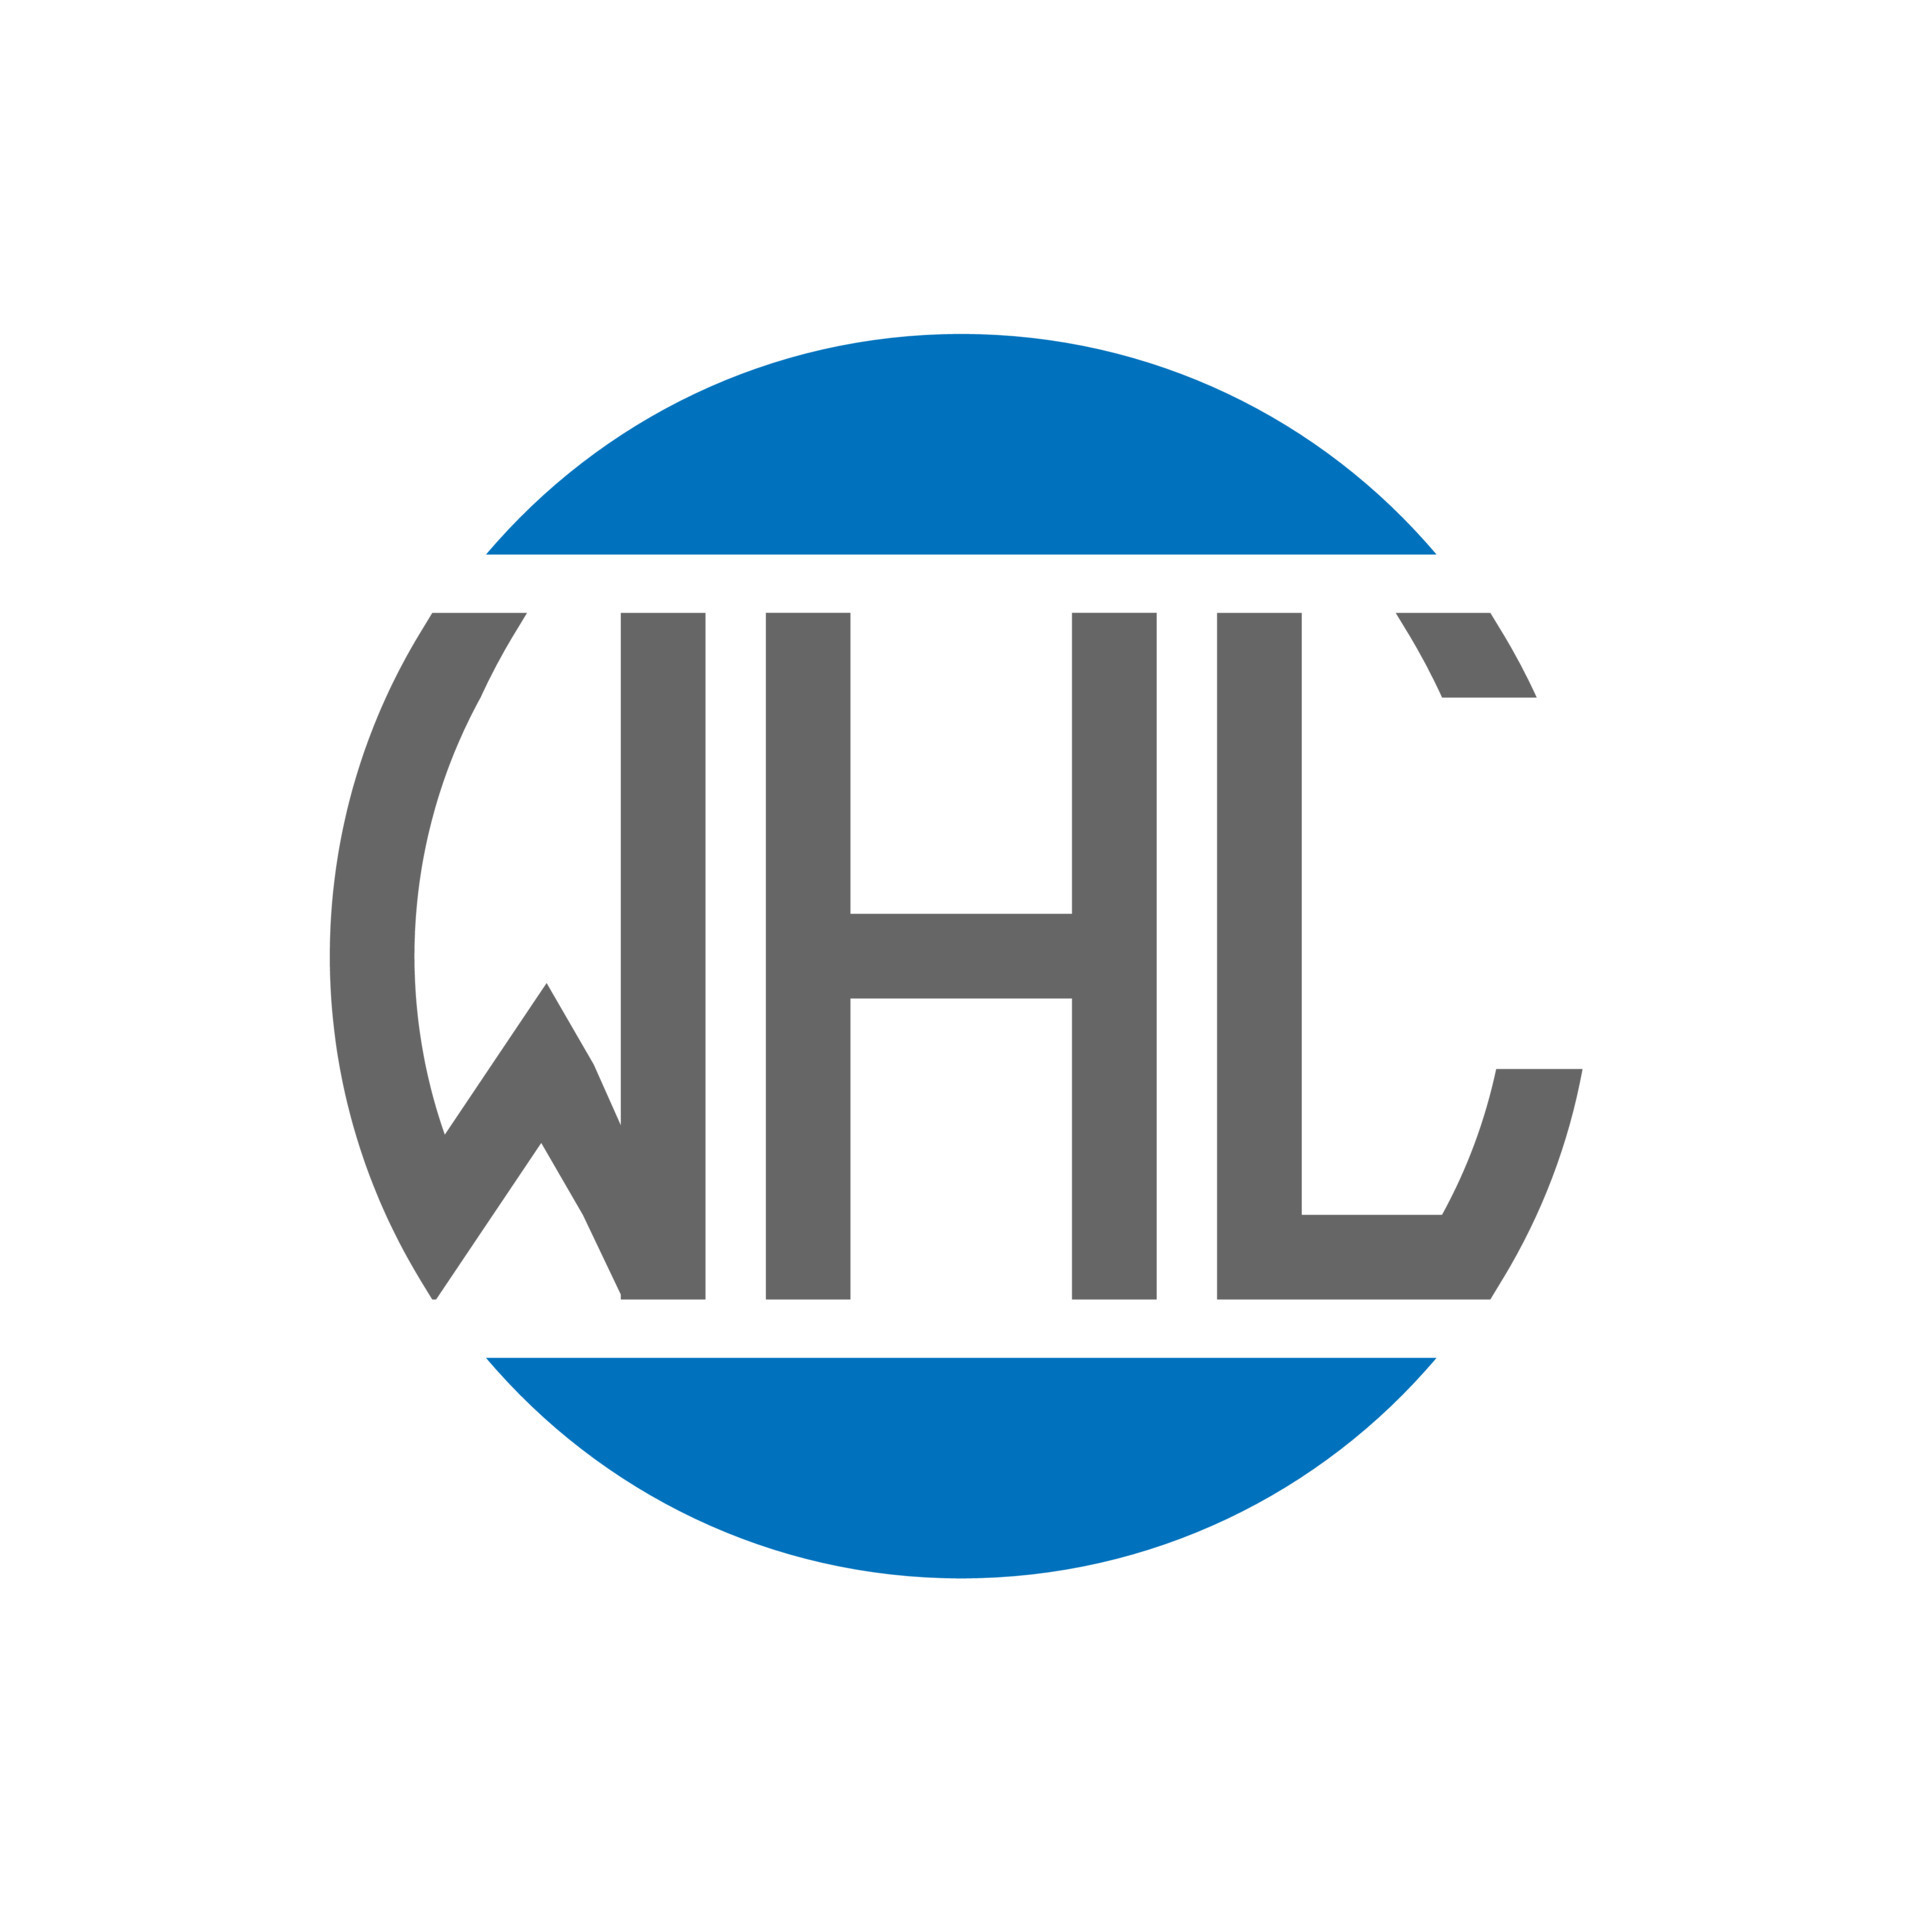 WHL Concepts 